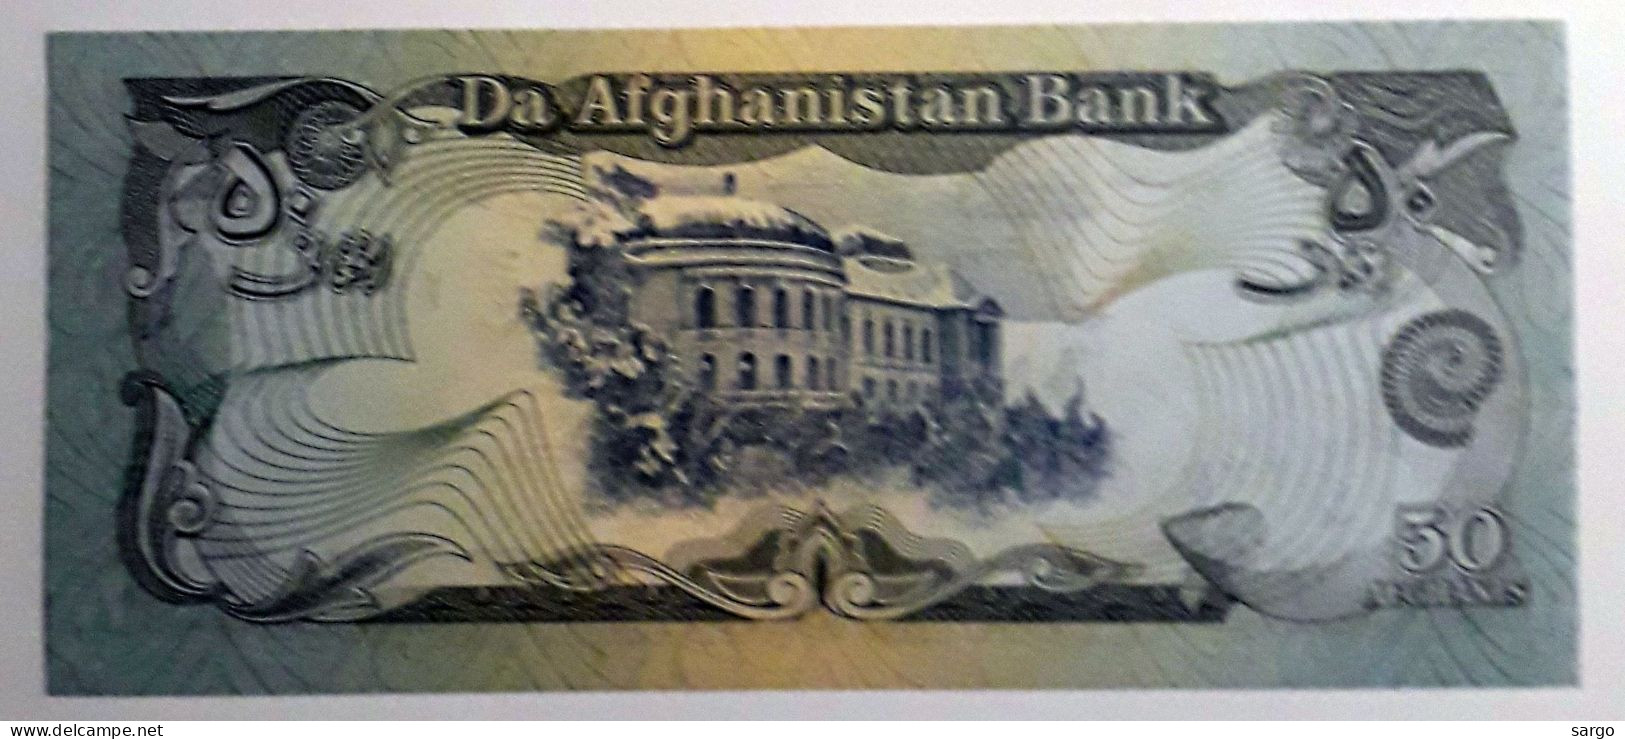 AFGHANISTAN - 50 AFGHANIS - 1979-1991  - UNC - P 57 - BANKNOTES - PAPER MONEY - CARTAMONETA - - Afghanistán